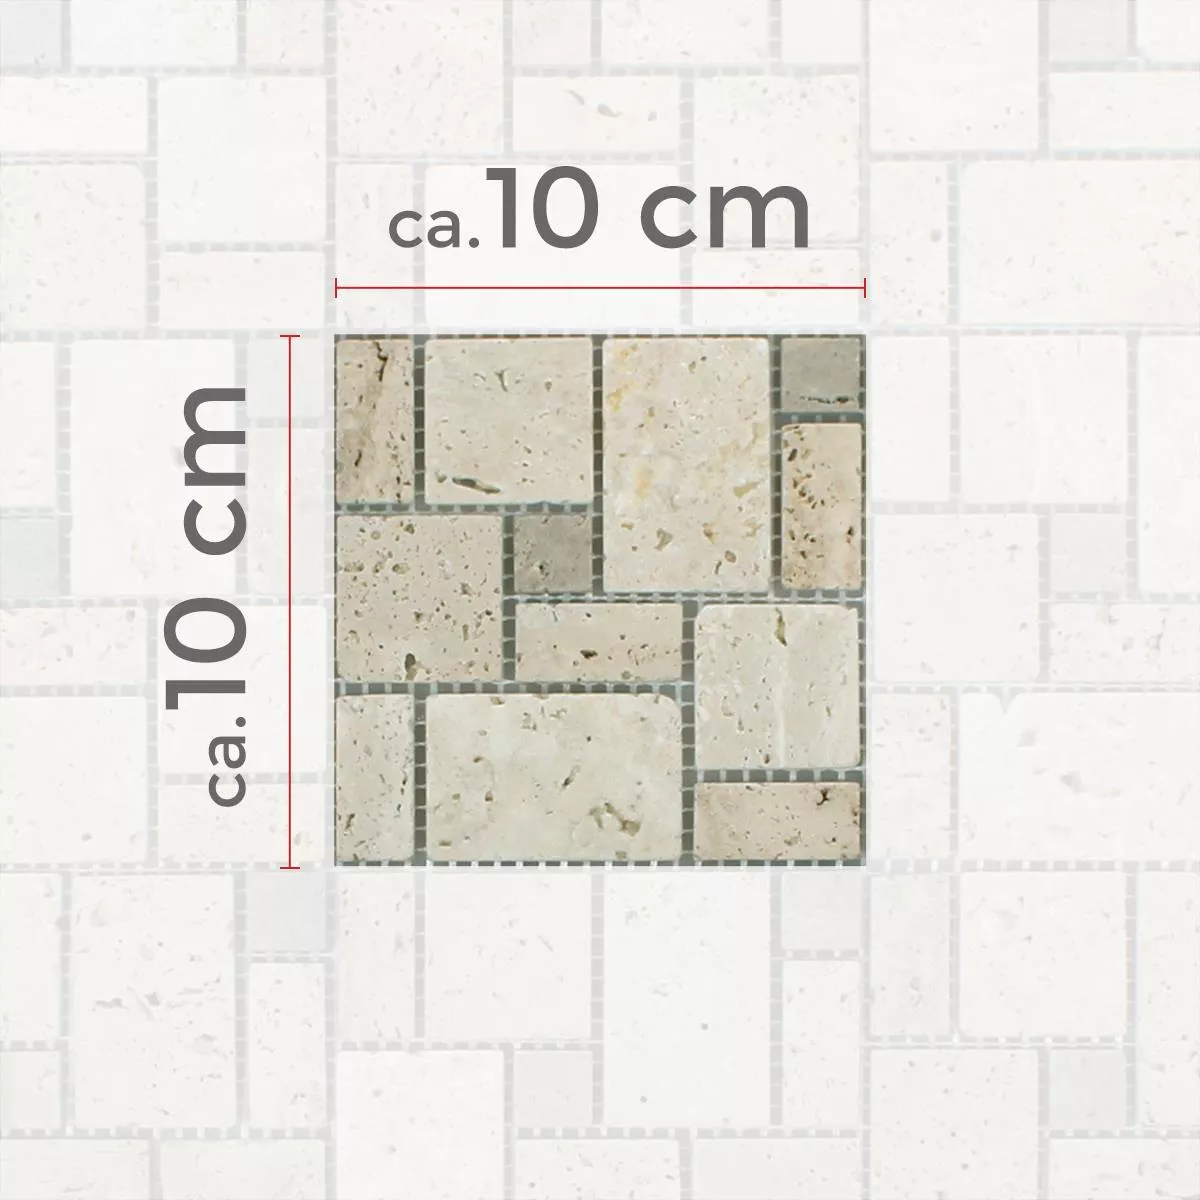 Sample Mosaic Tiles Airbrush Travertin Beige